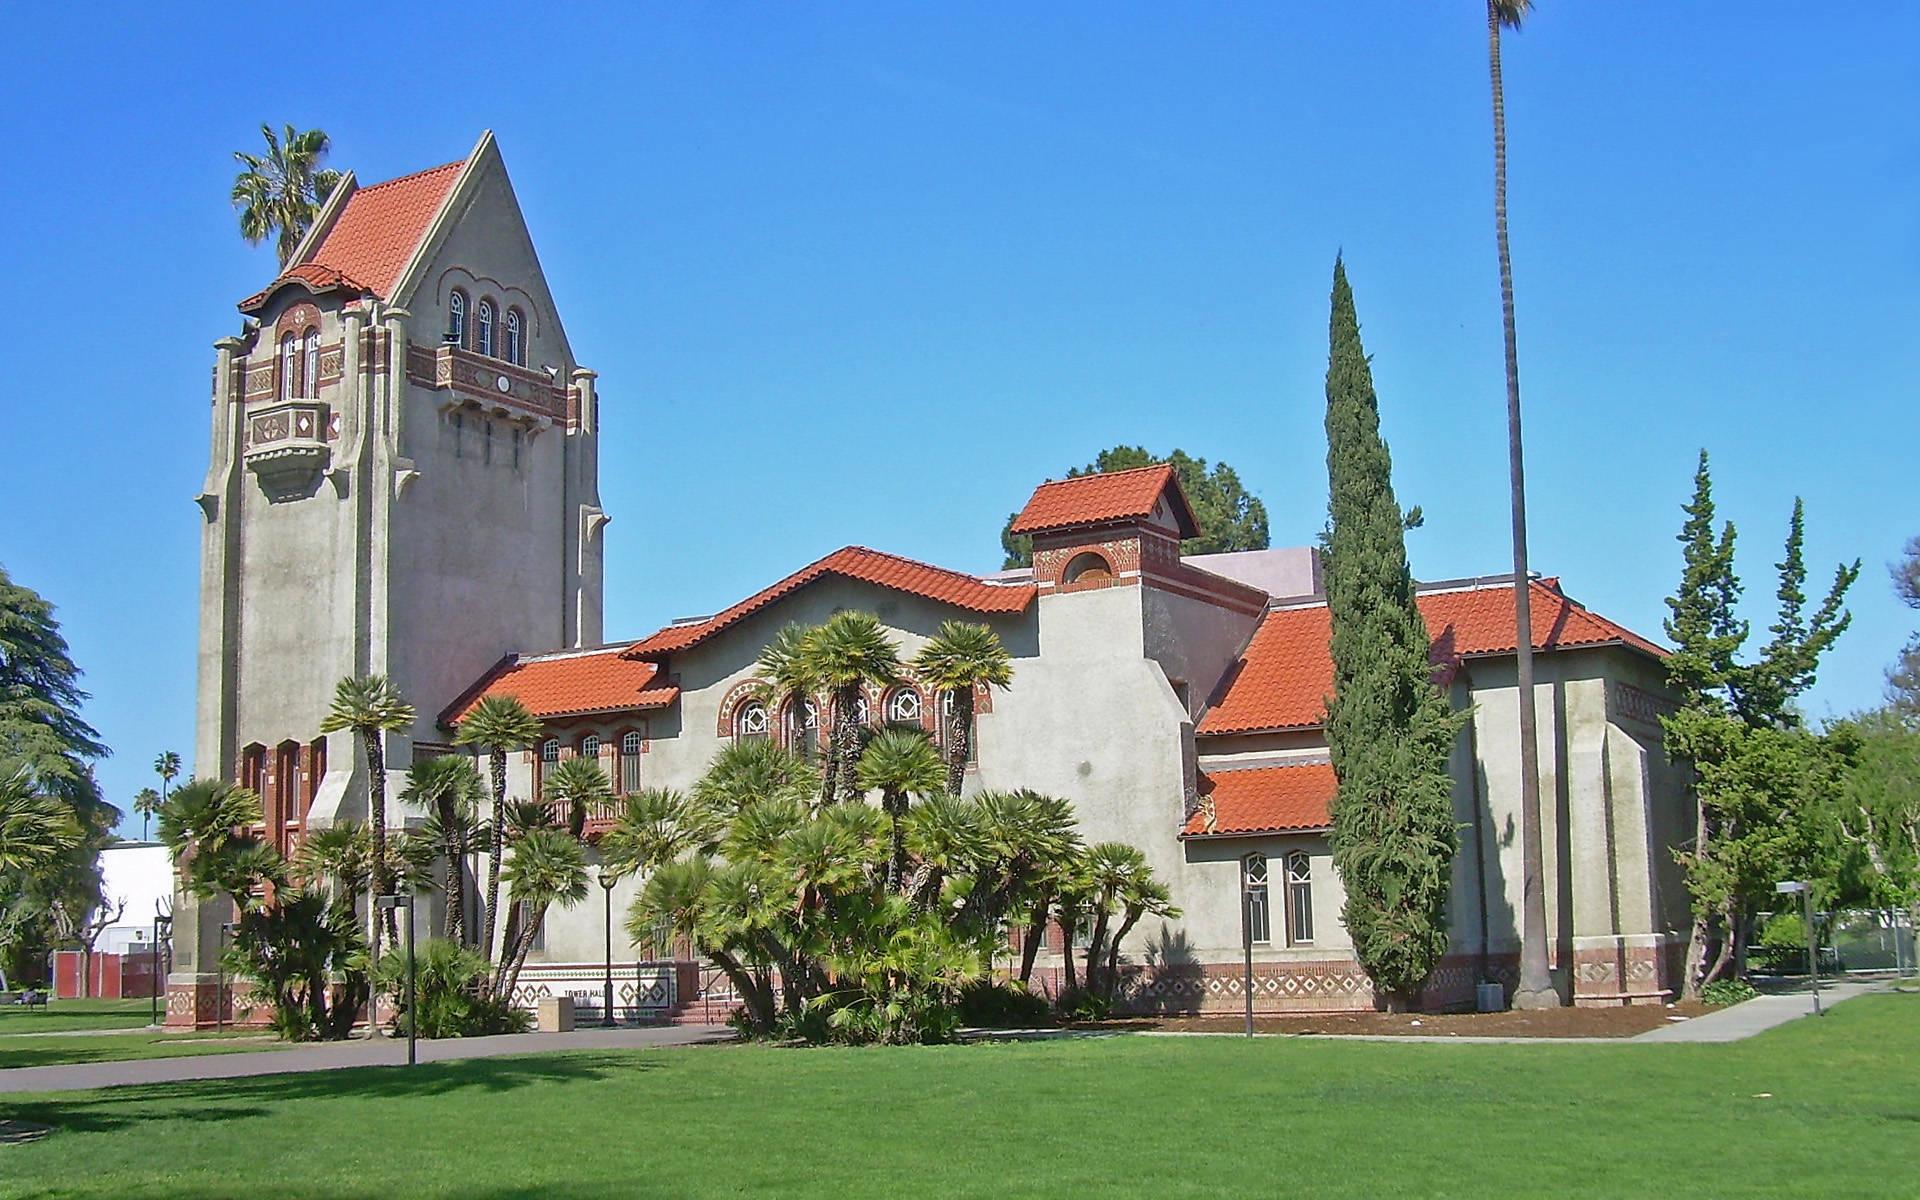 SJSU tower hall at city of San Jose California USA